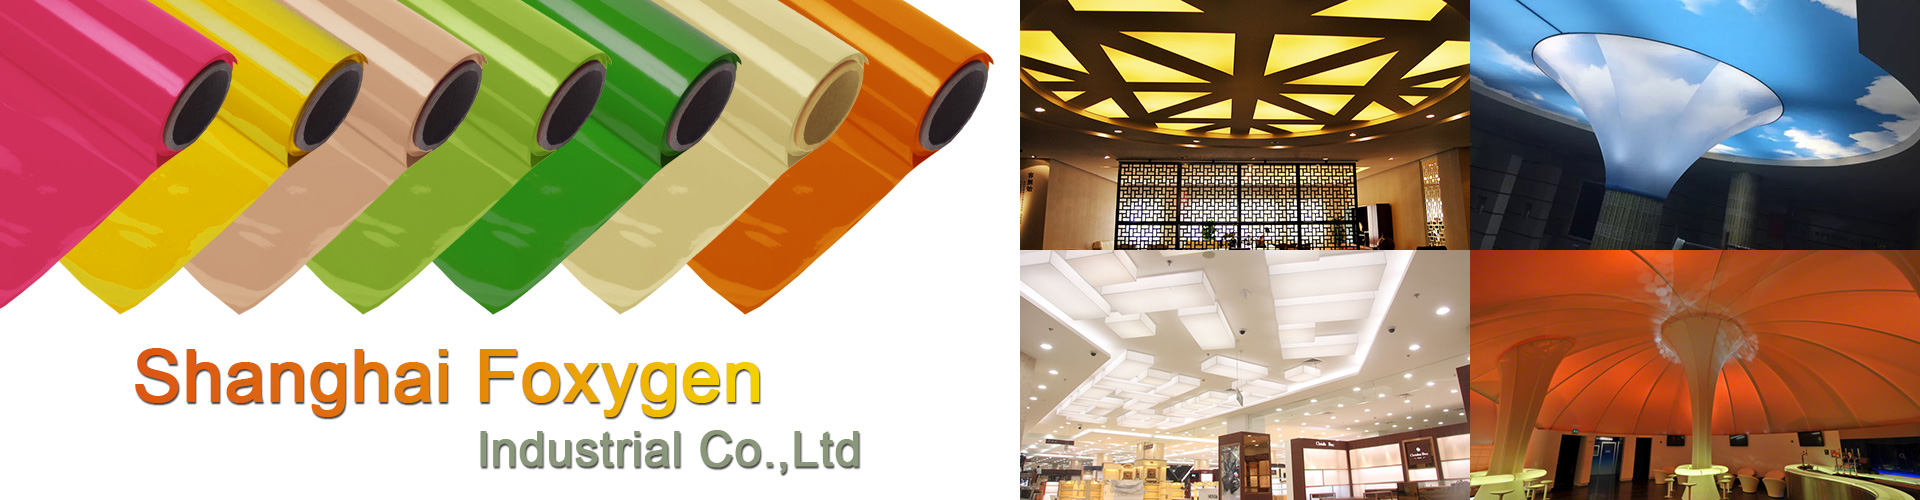 Shanghai  foxygen  industrial  Co.,Ltd. Main Image